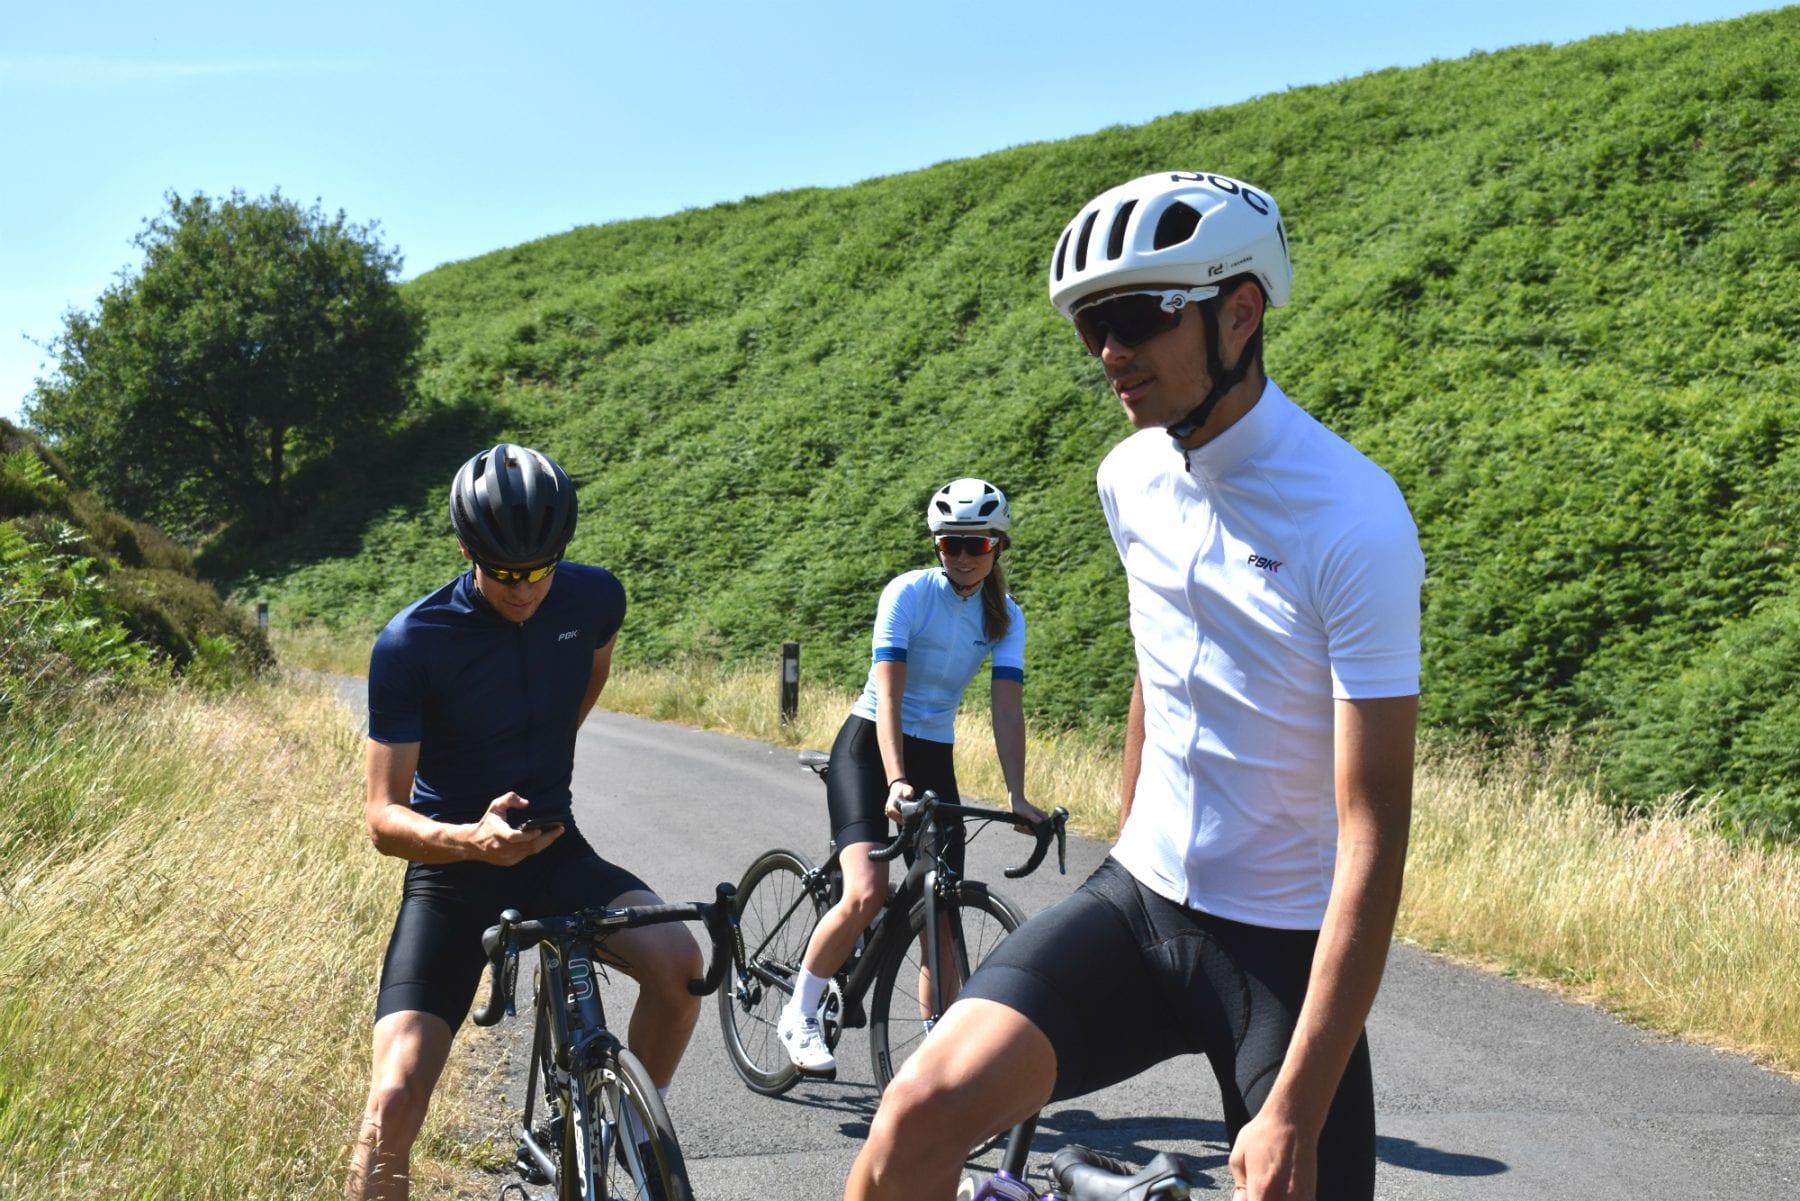 three cyclists stood wearing PBK clothing